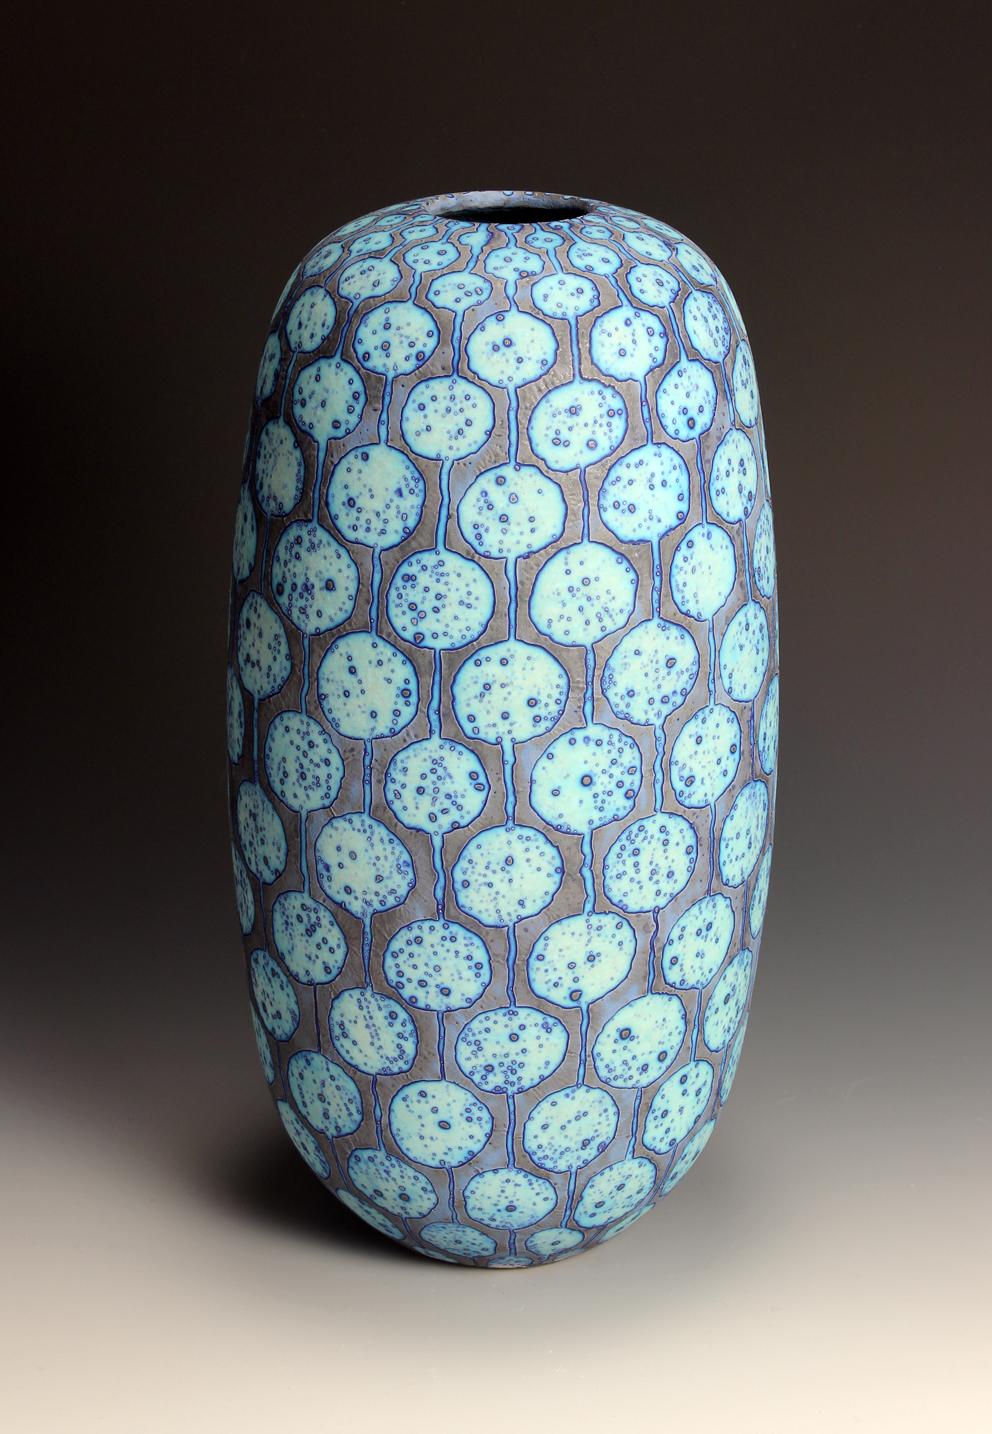 Earthenware Peter Beard 1970s inspired Vase